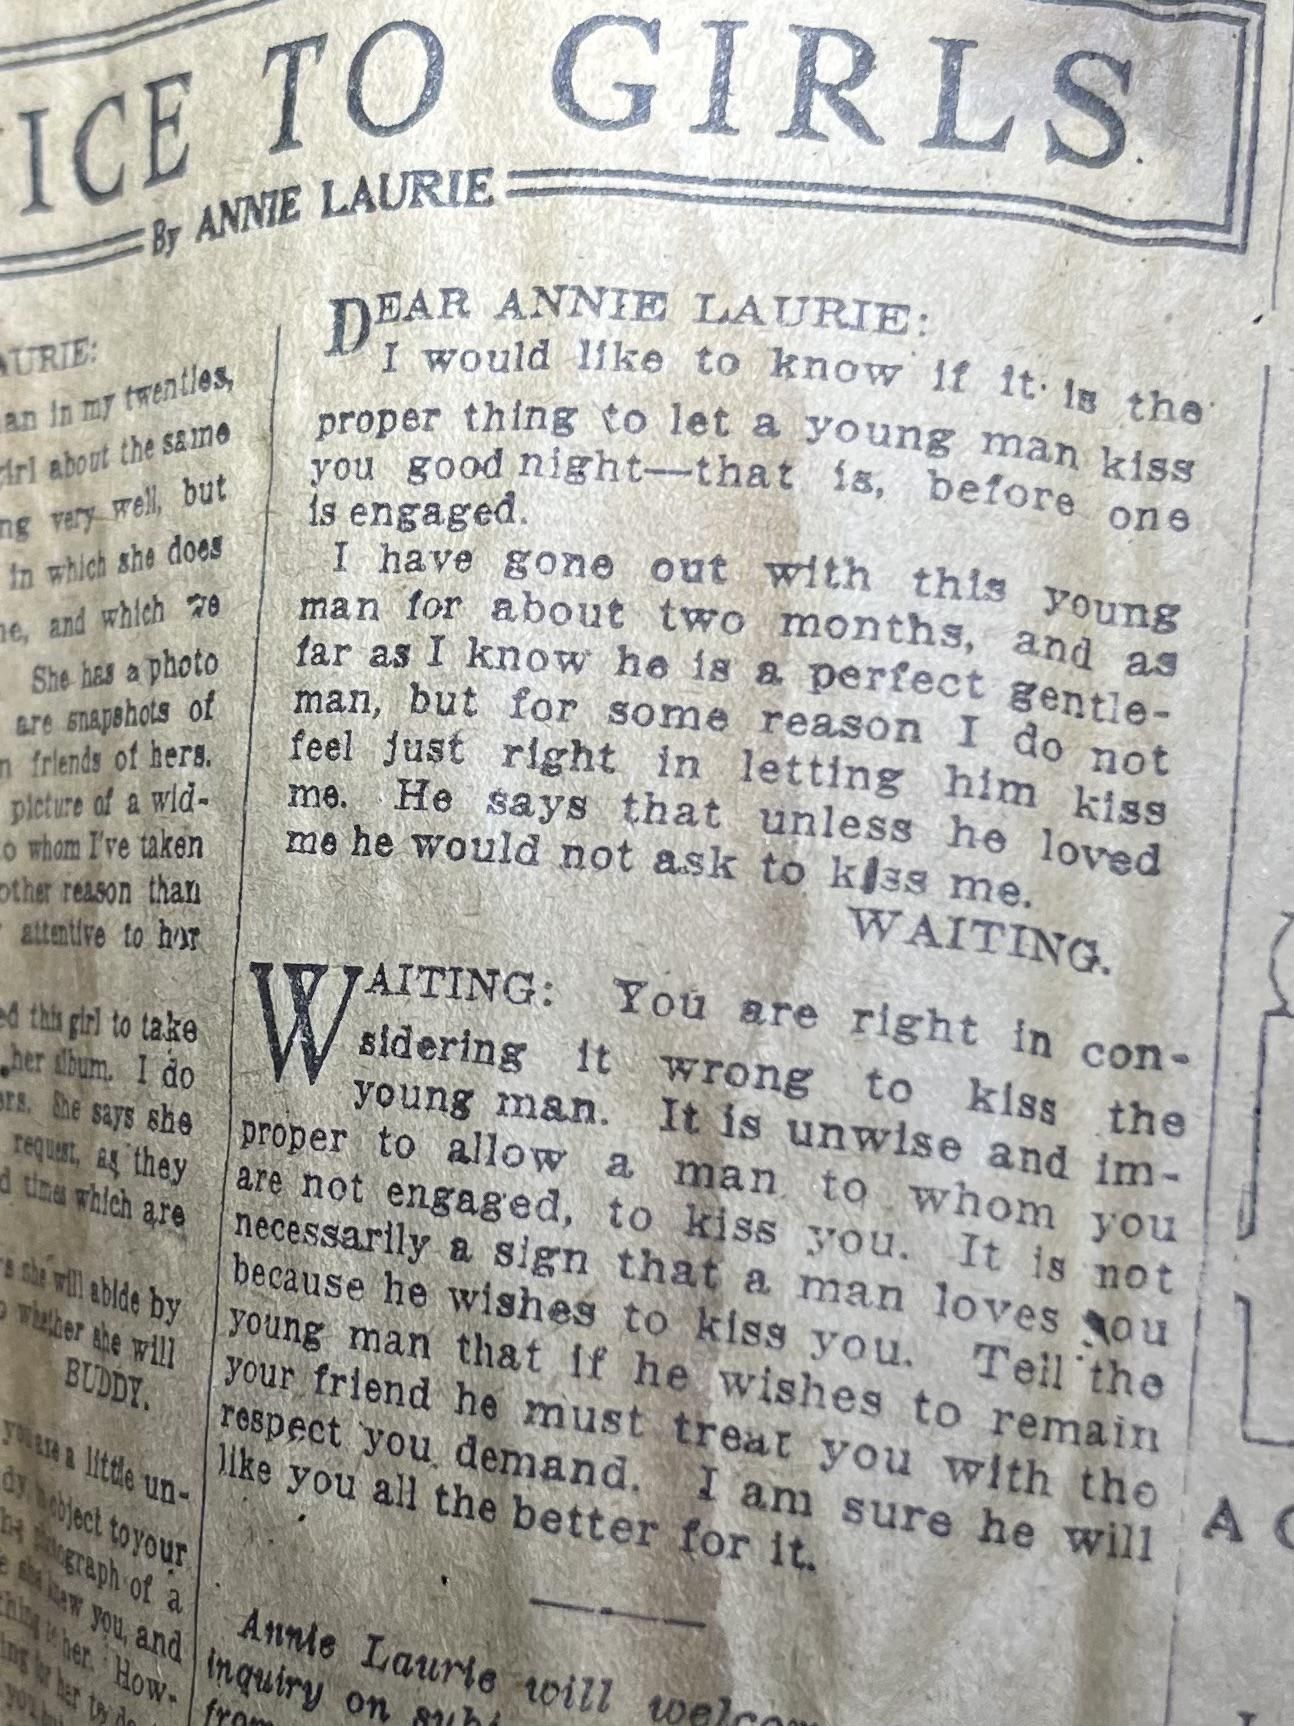 Found in 1922 newspaper in attic today.